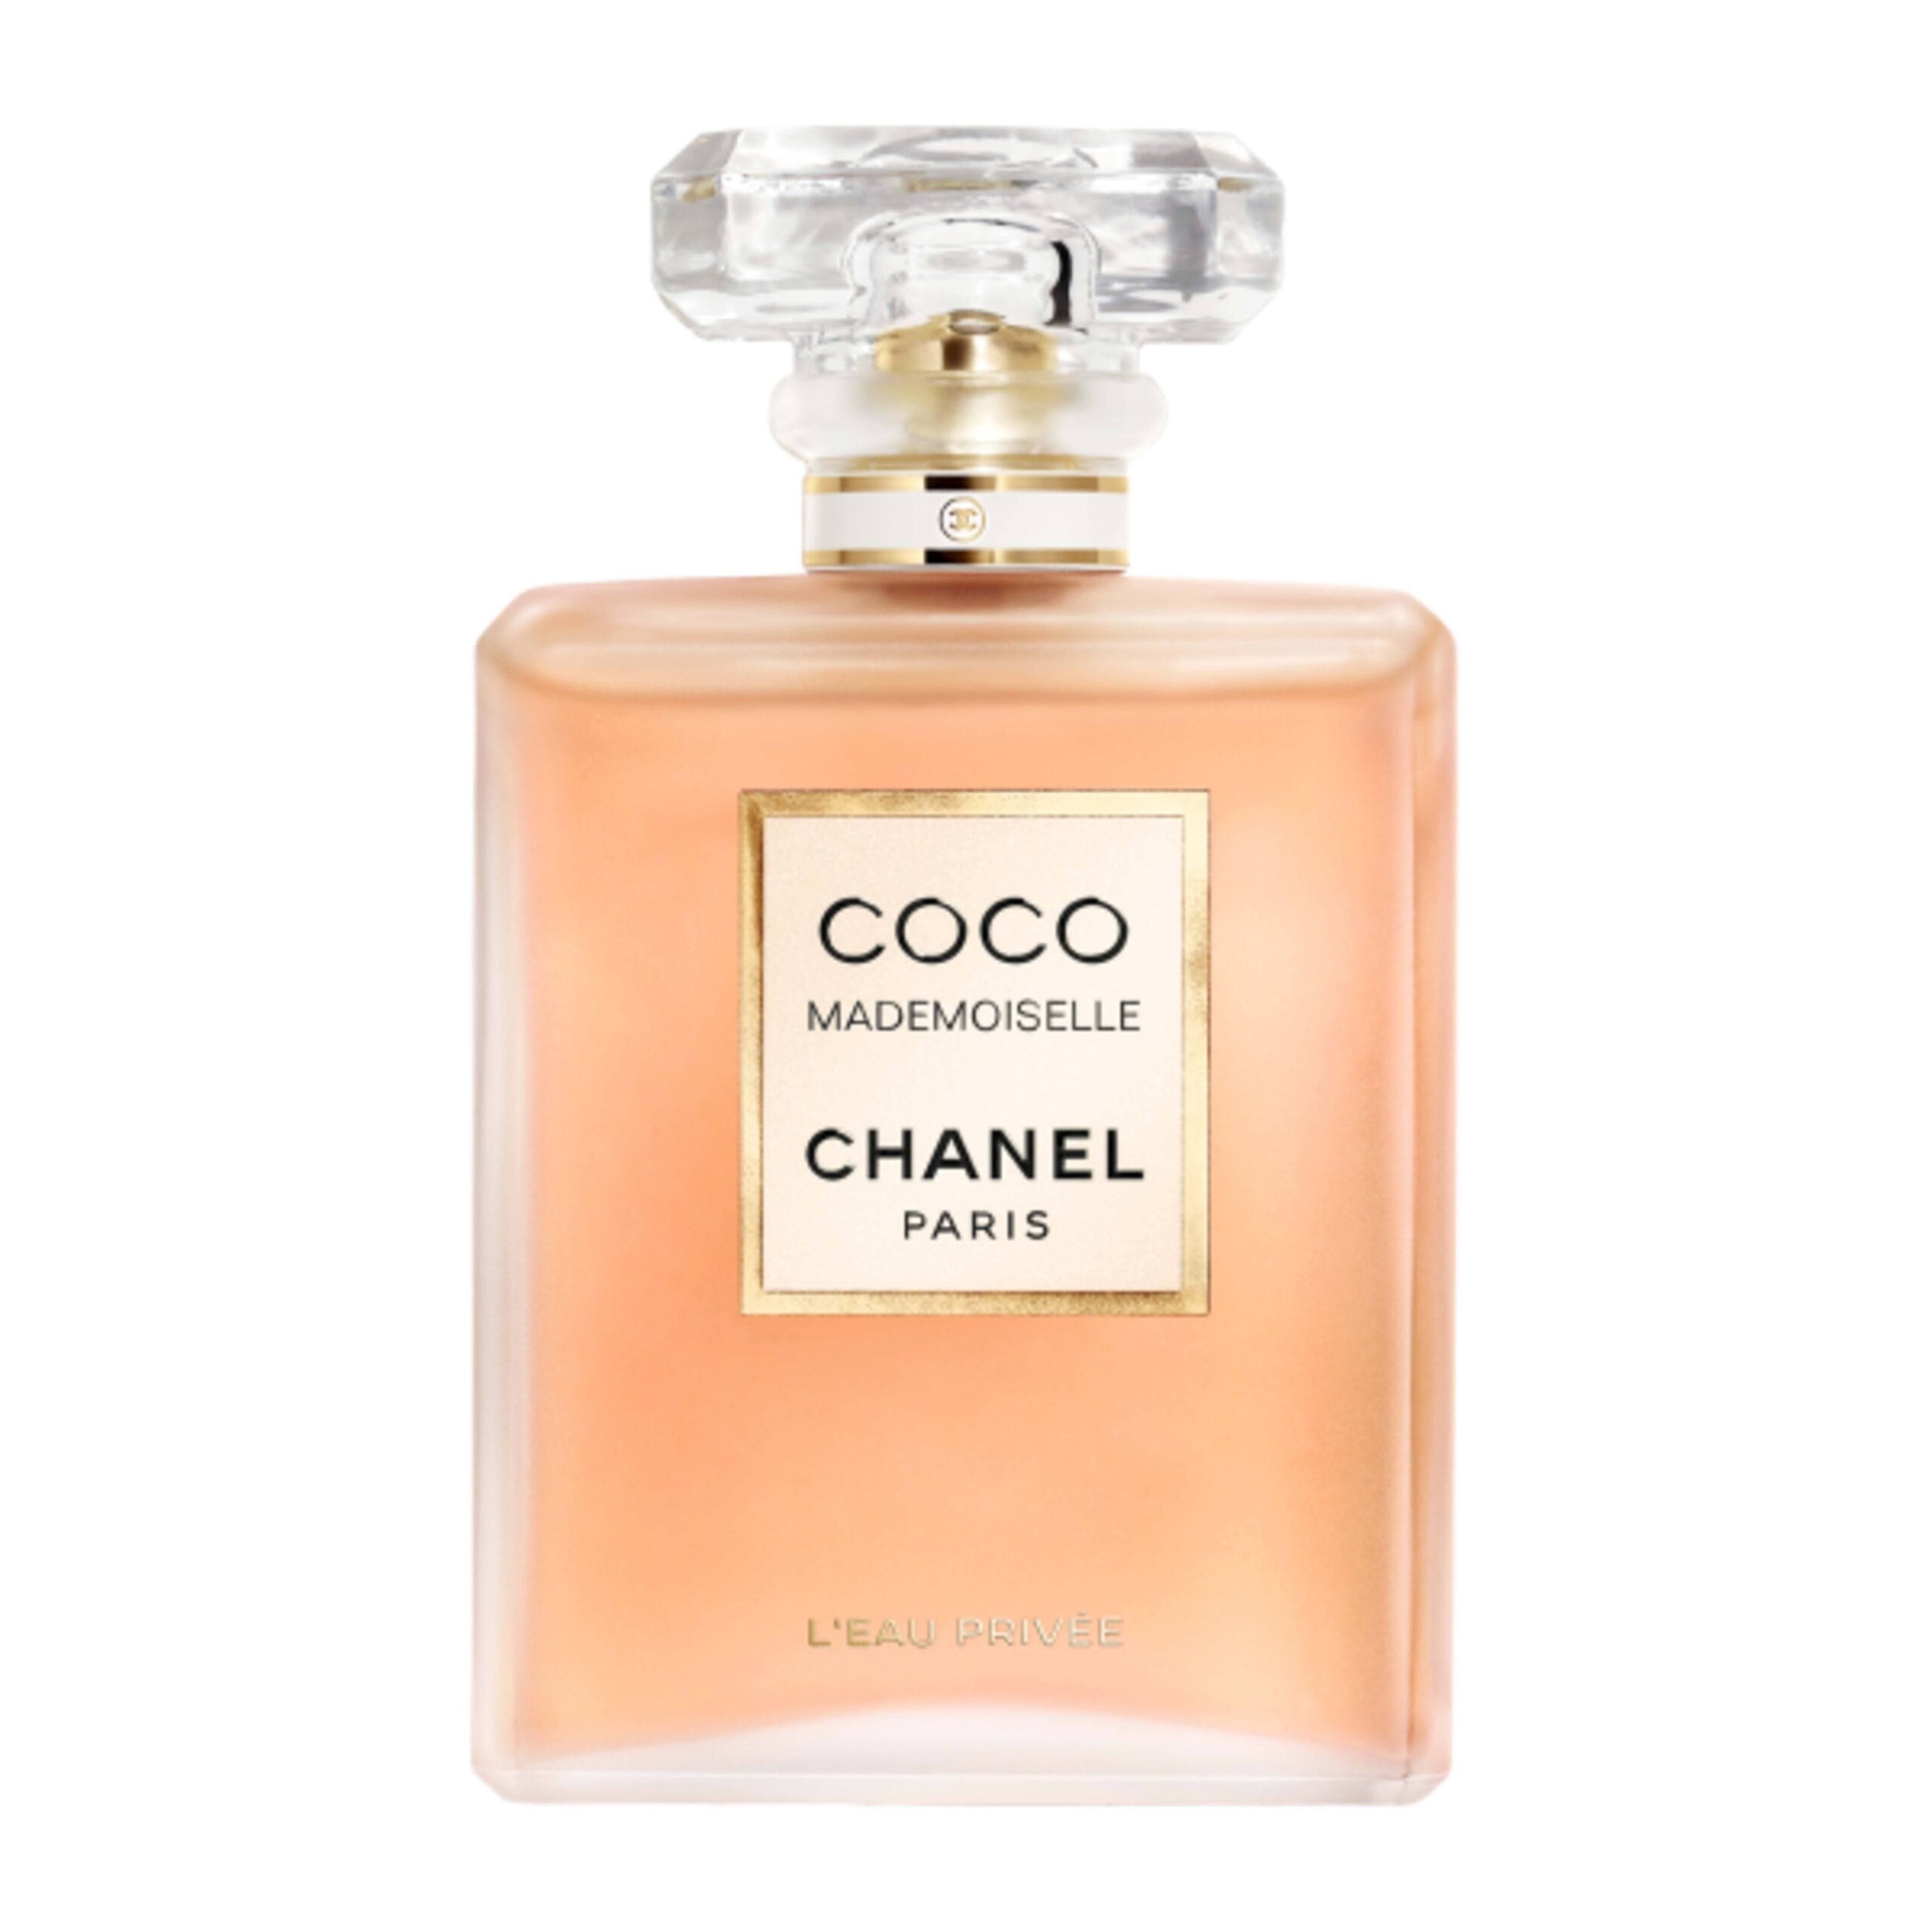 Chanel Coco Mademoiselle L'eau Privee - New Arrival | Buy Perfume ...